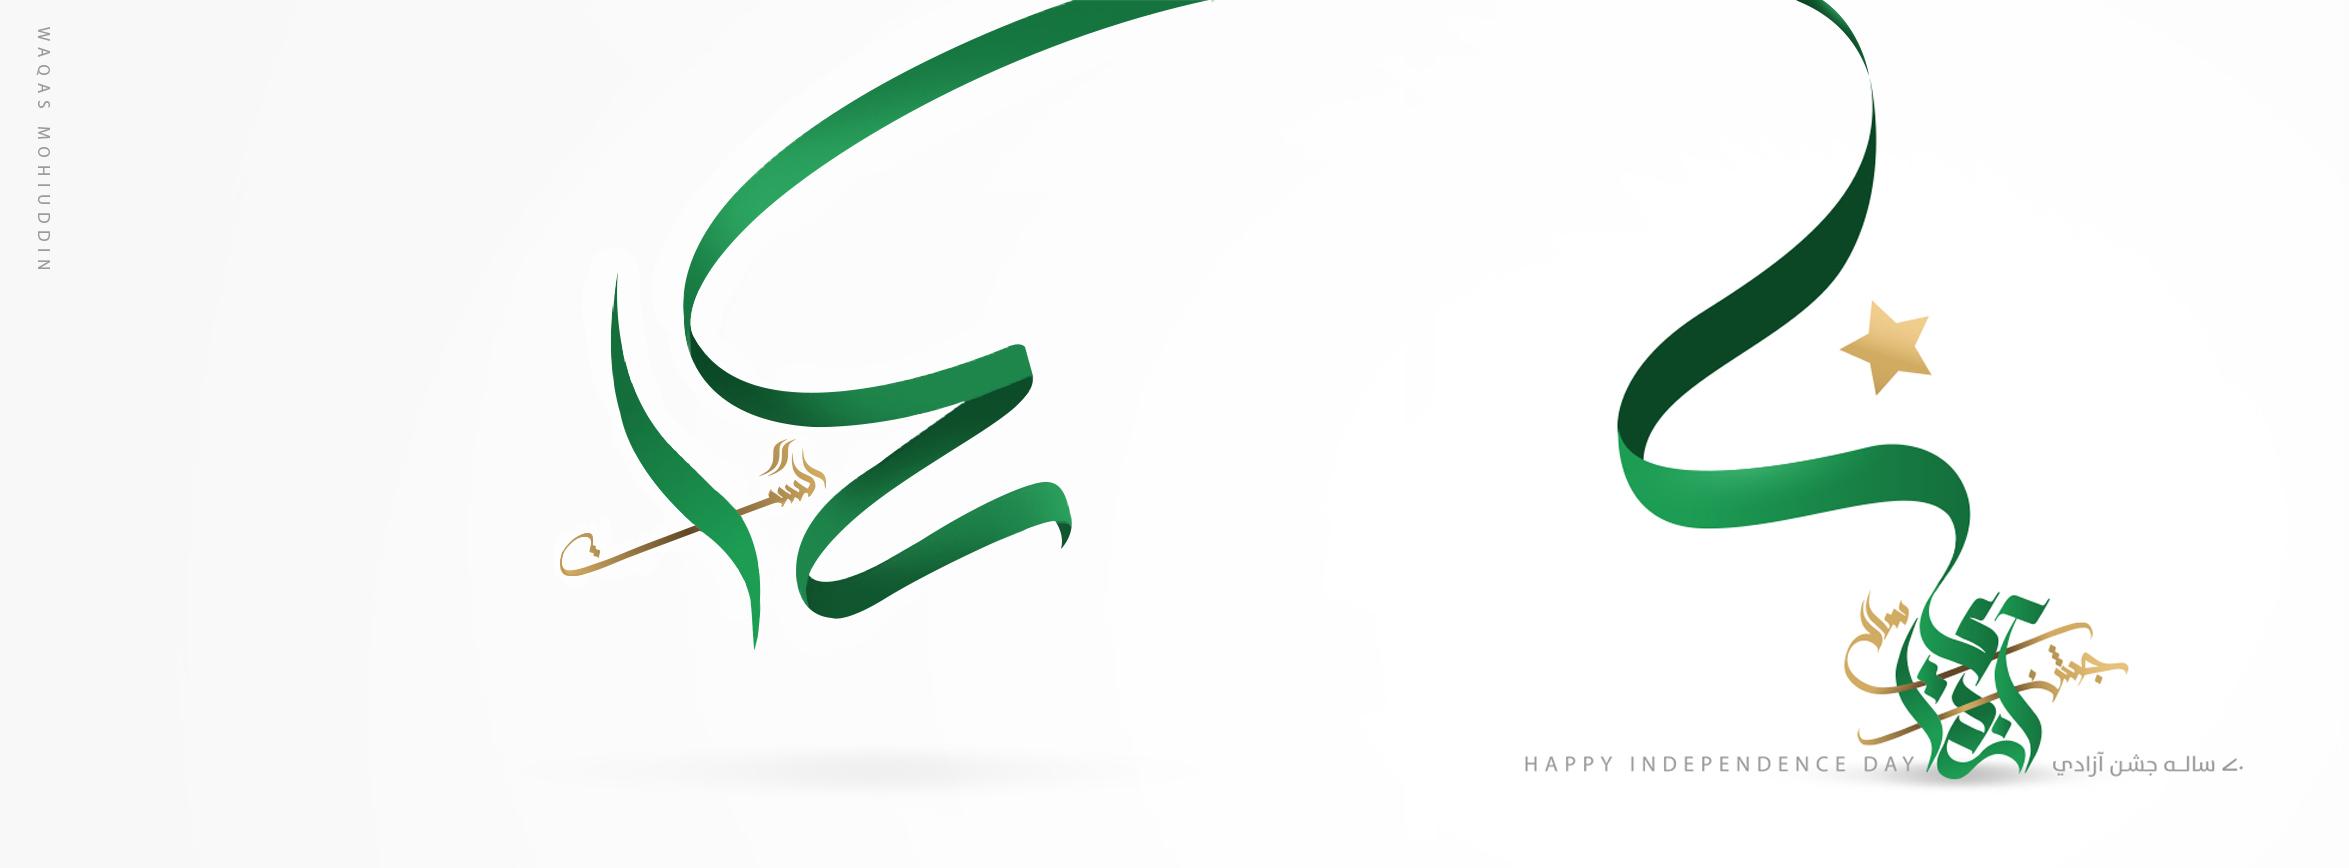 Independence Logo - Pakistan's 70 Years Independence Logo Designs | GharanaPK